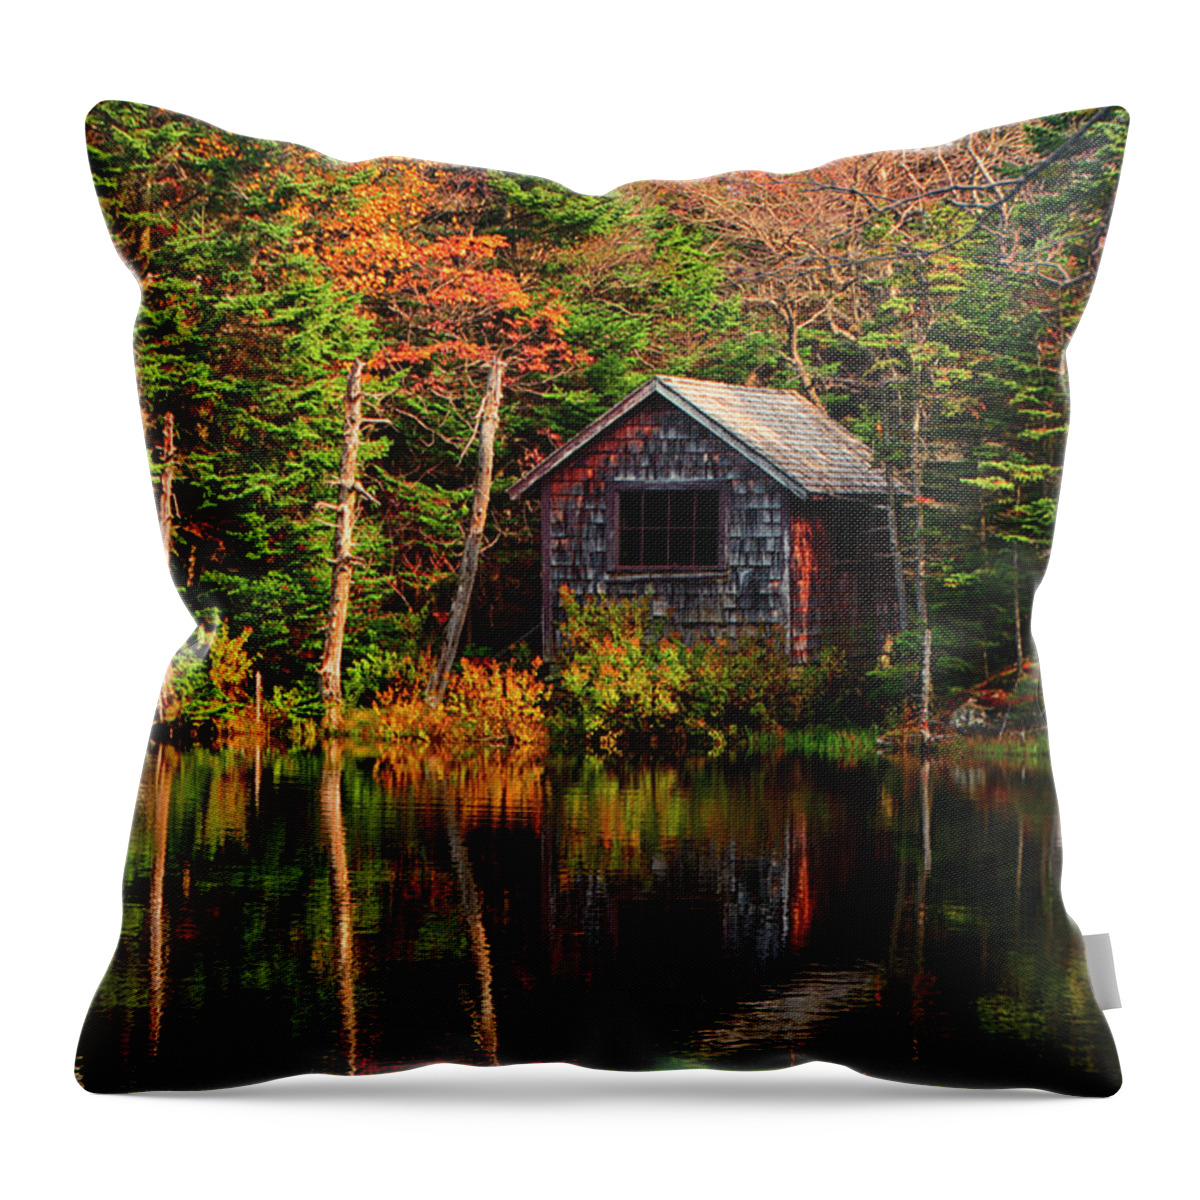 Mount Greylock Cabin Throw Pillow featuring the photograph Mount Greylock Cabin by Raymond Salani III